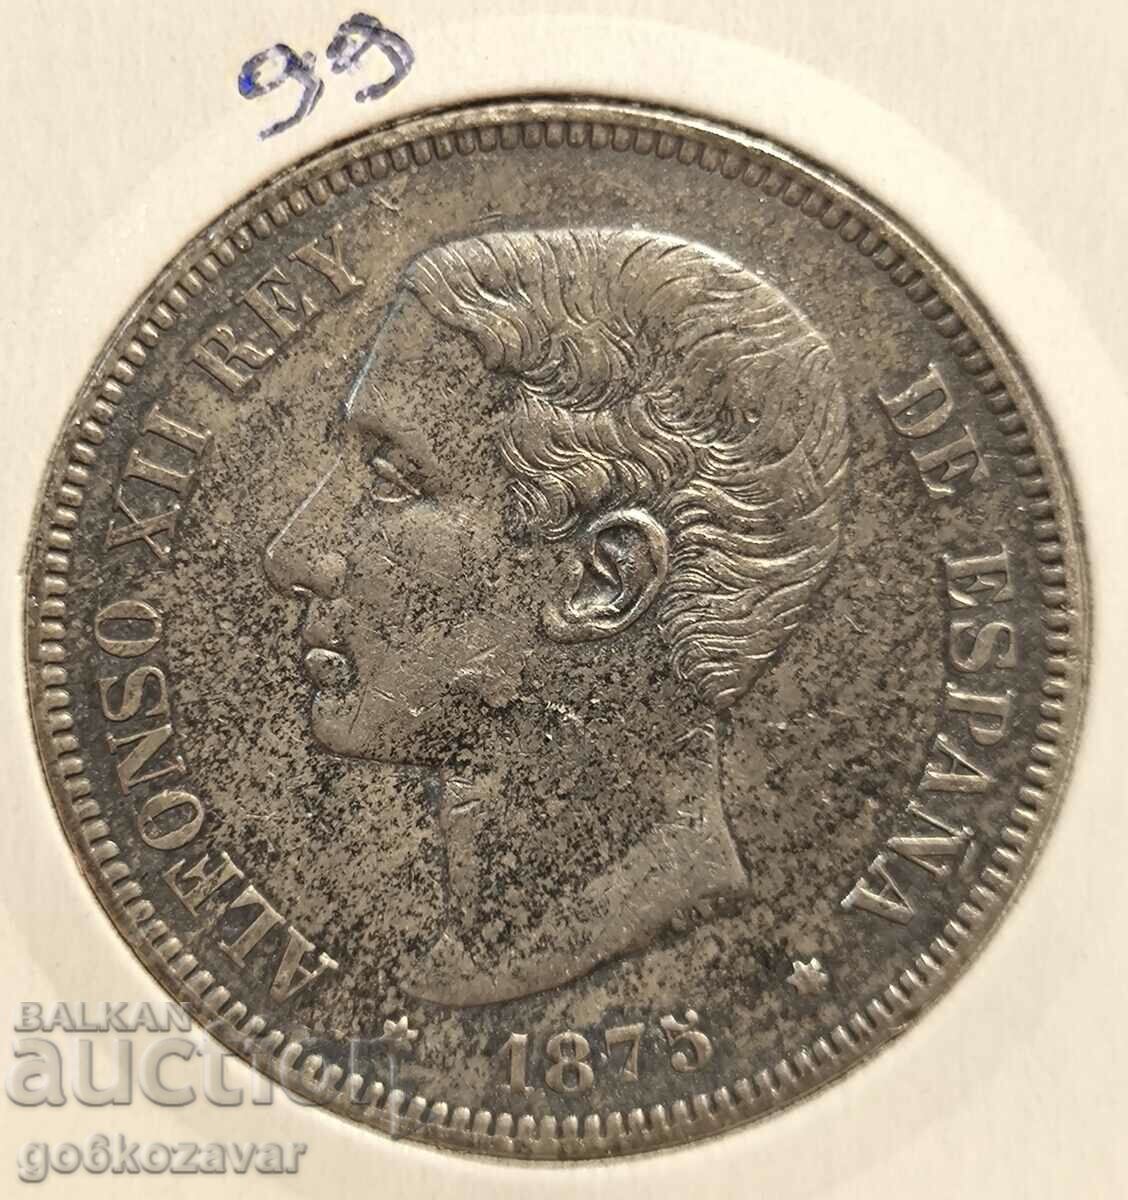 Spain 5 pesetas 1875 Silver!